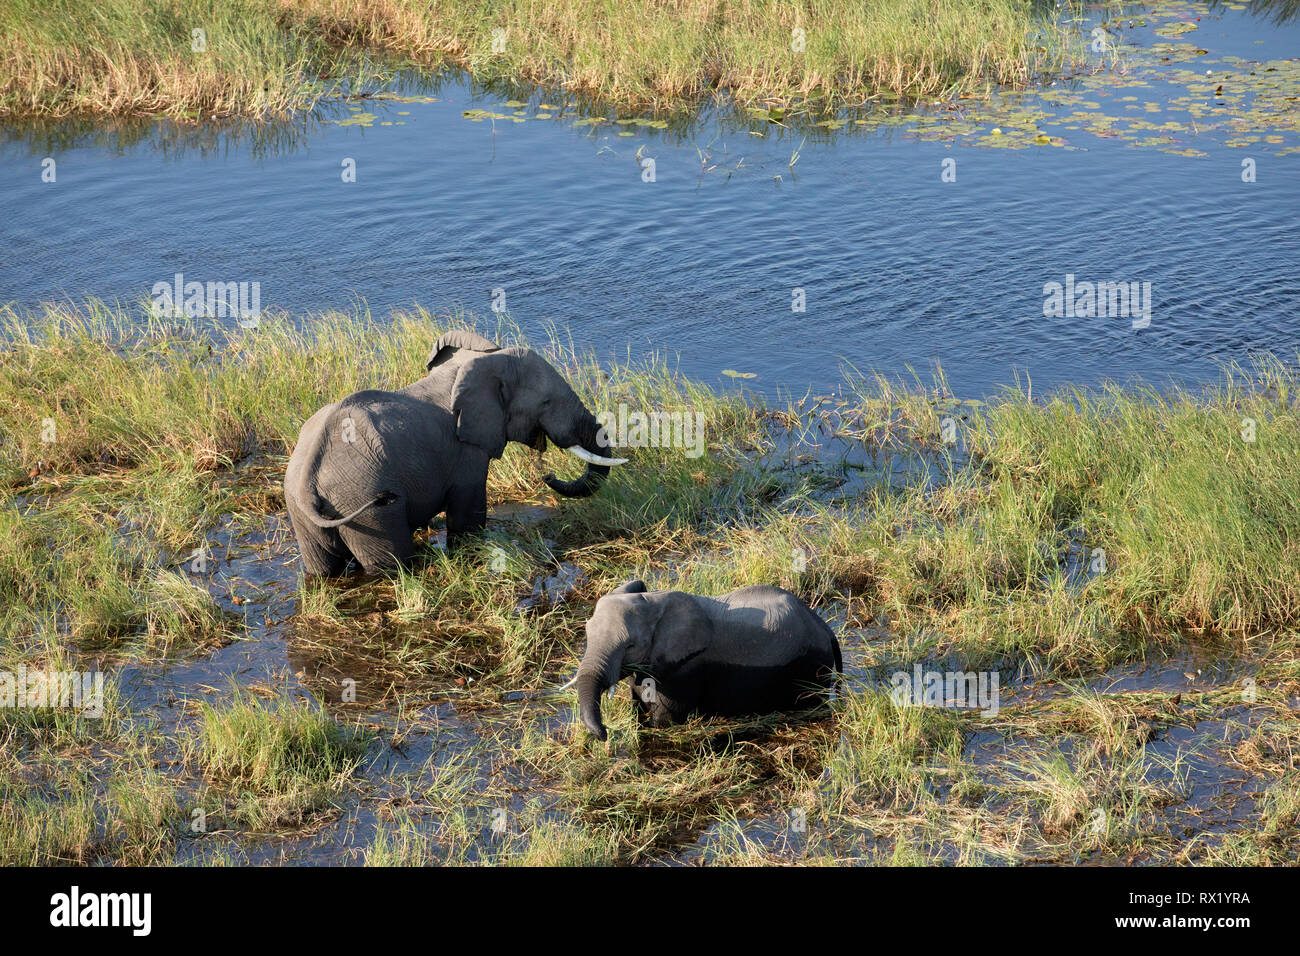 Aus der Luft im Okavango Delta, Botswana Elephant. Stockfoto